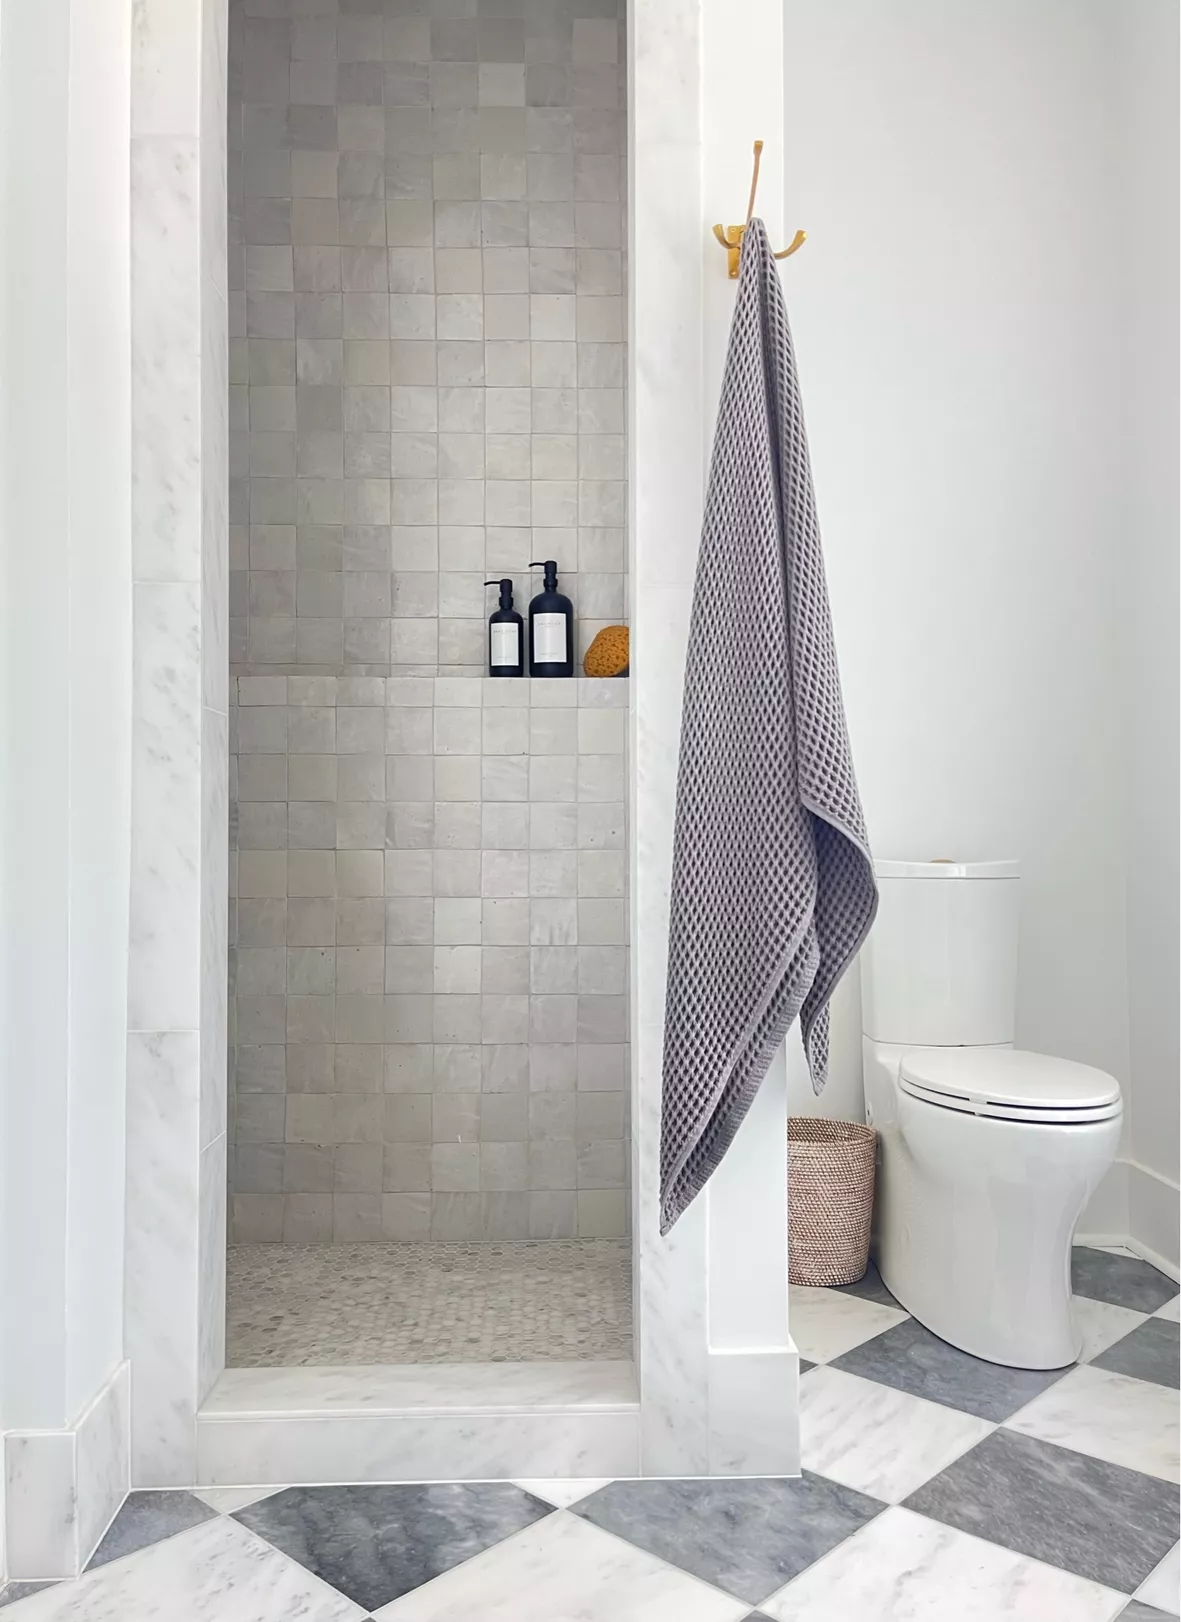 Organic Bath Towel White - Casaluna™ : Target